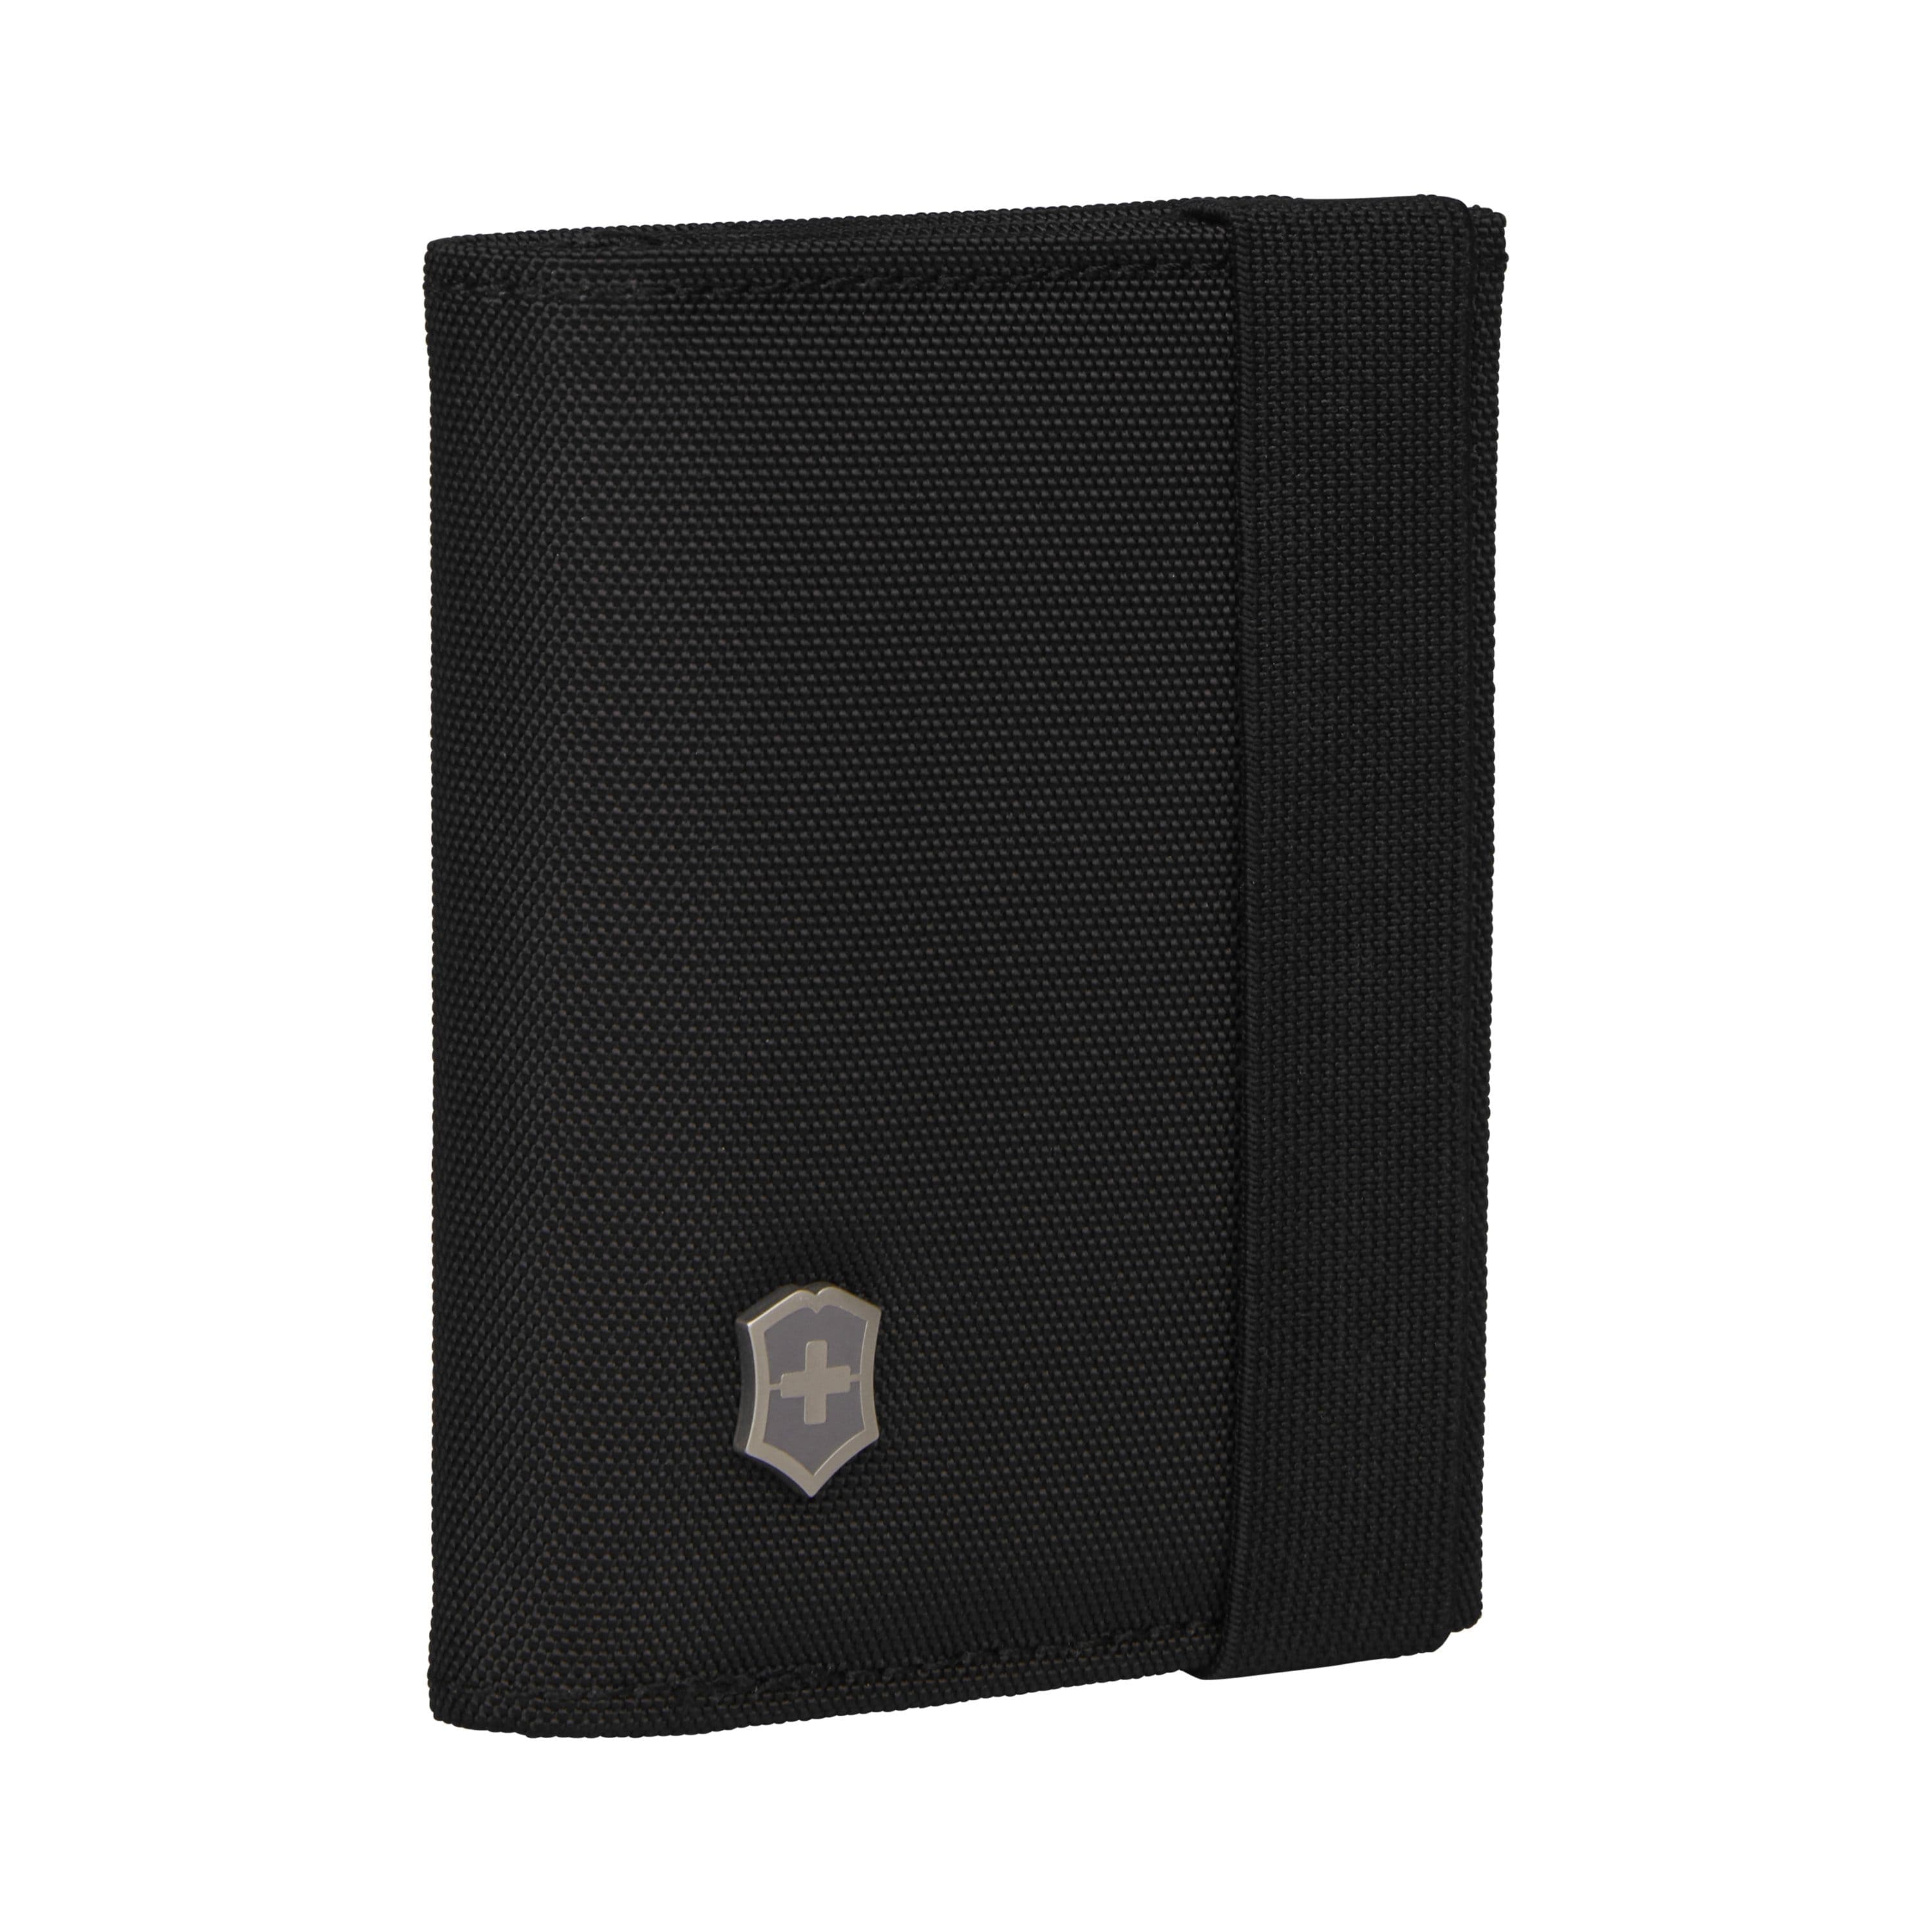 Victorinox Travel Accessories 5.0 Tri-Fold Black Wallet - 610394